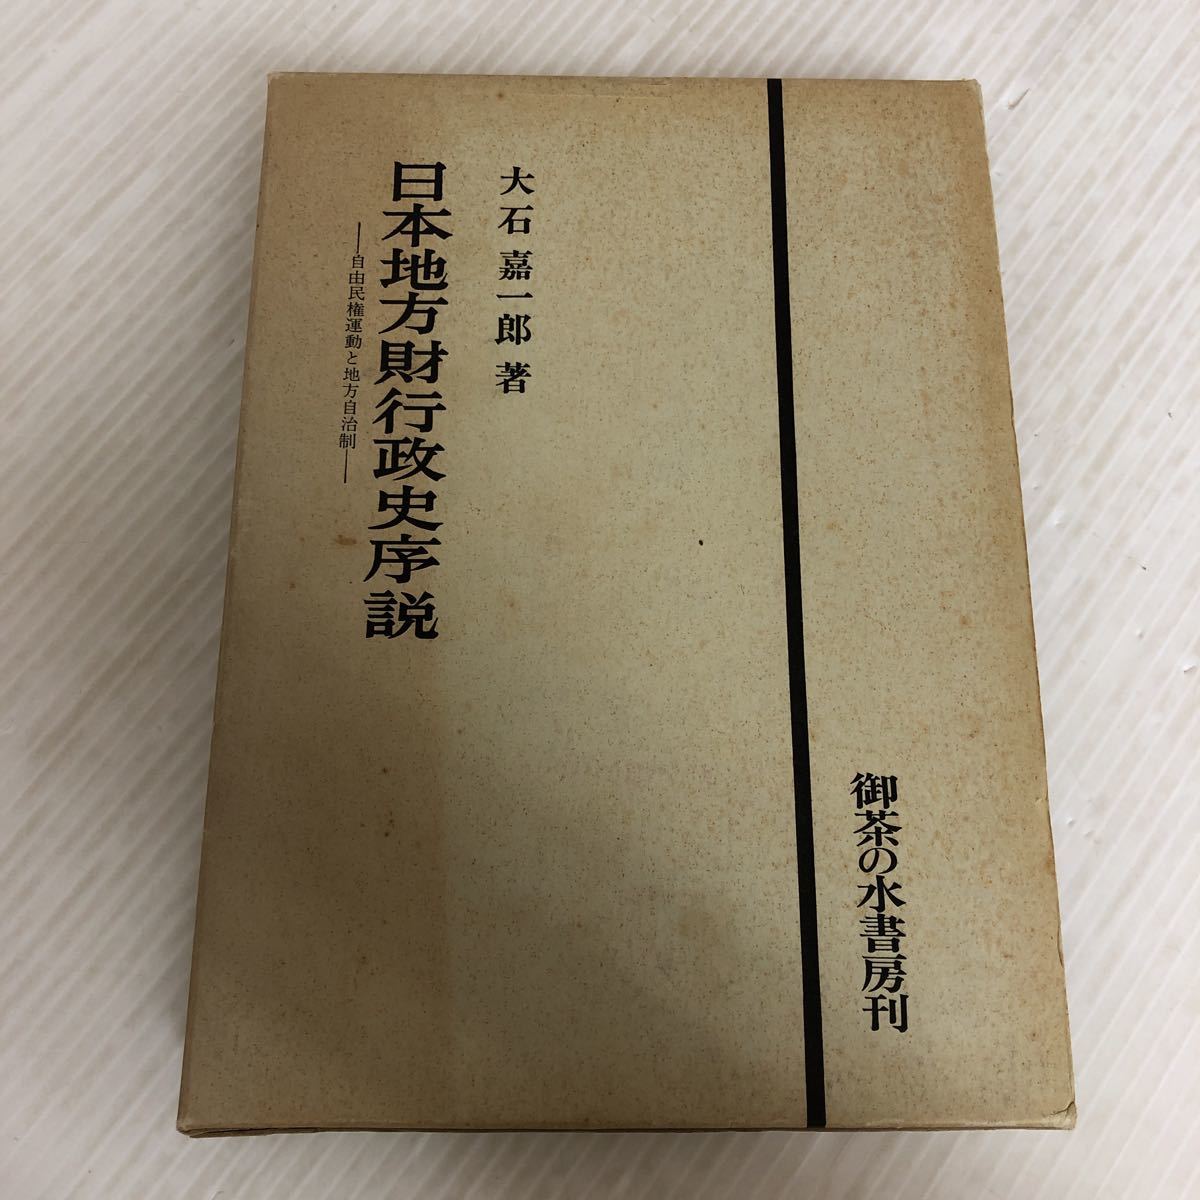 M-ш/ 日本地方財行政史序説 著/大石嘉一郎 1980年改装版第2刷発行 御茶の水書房